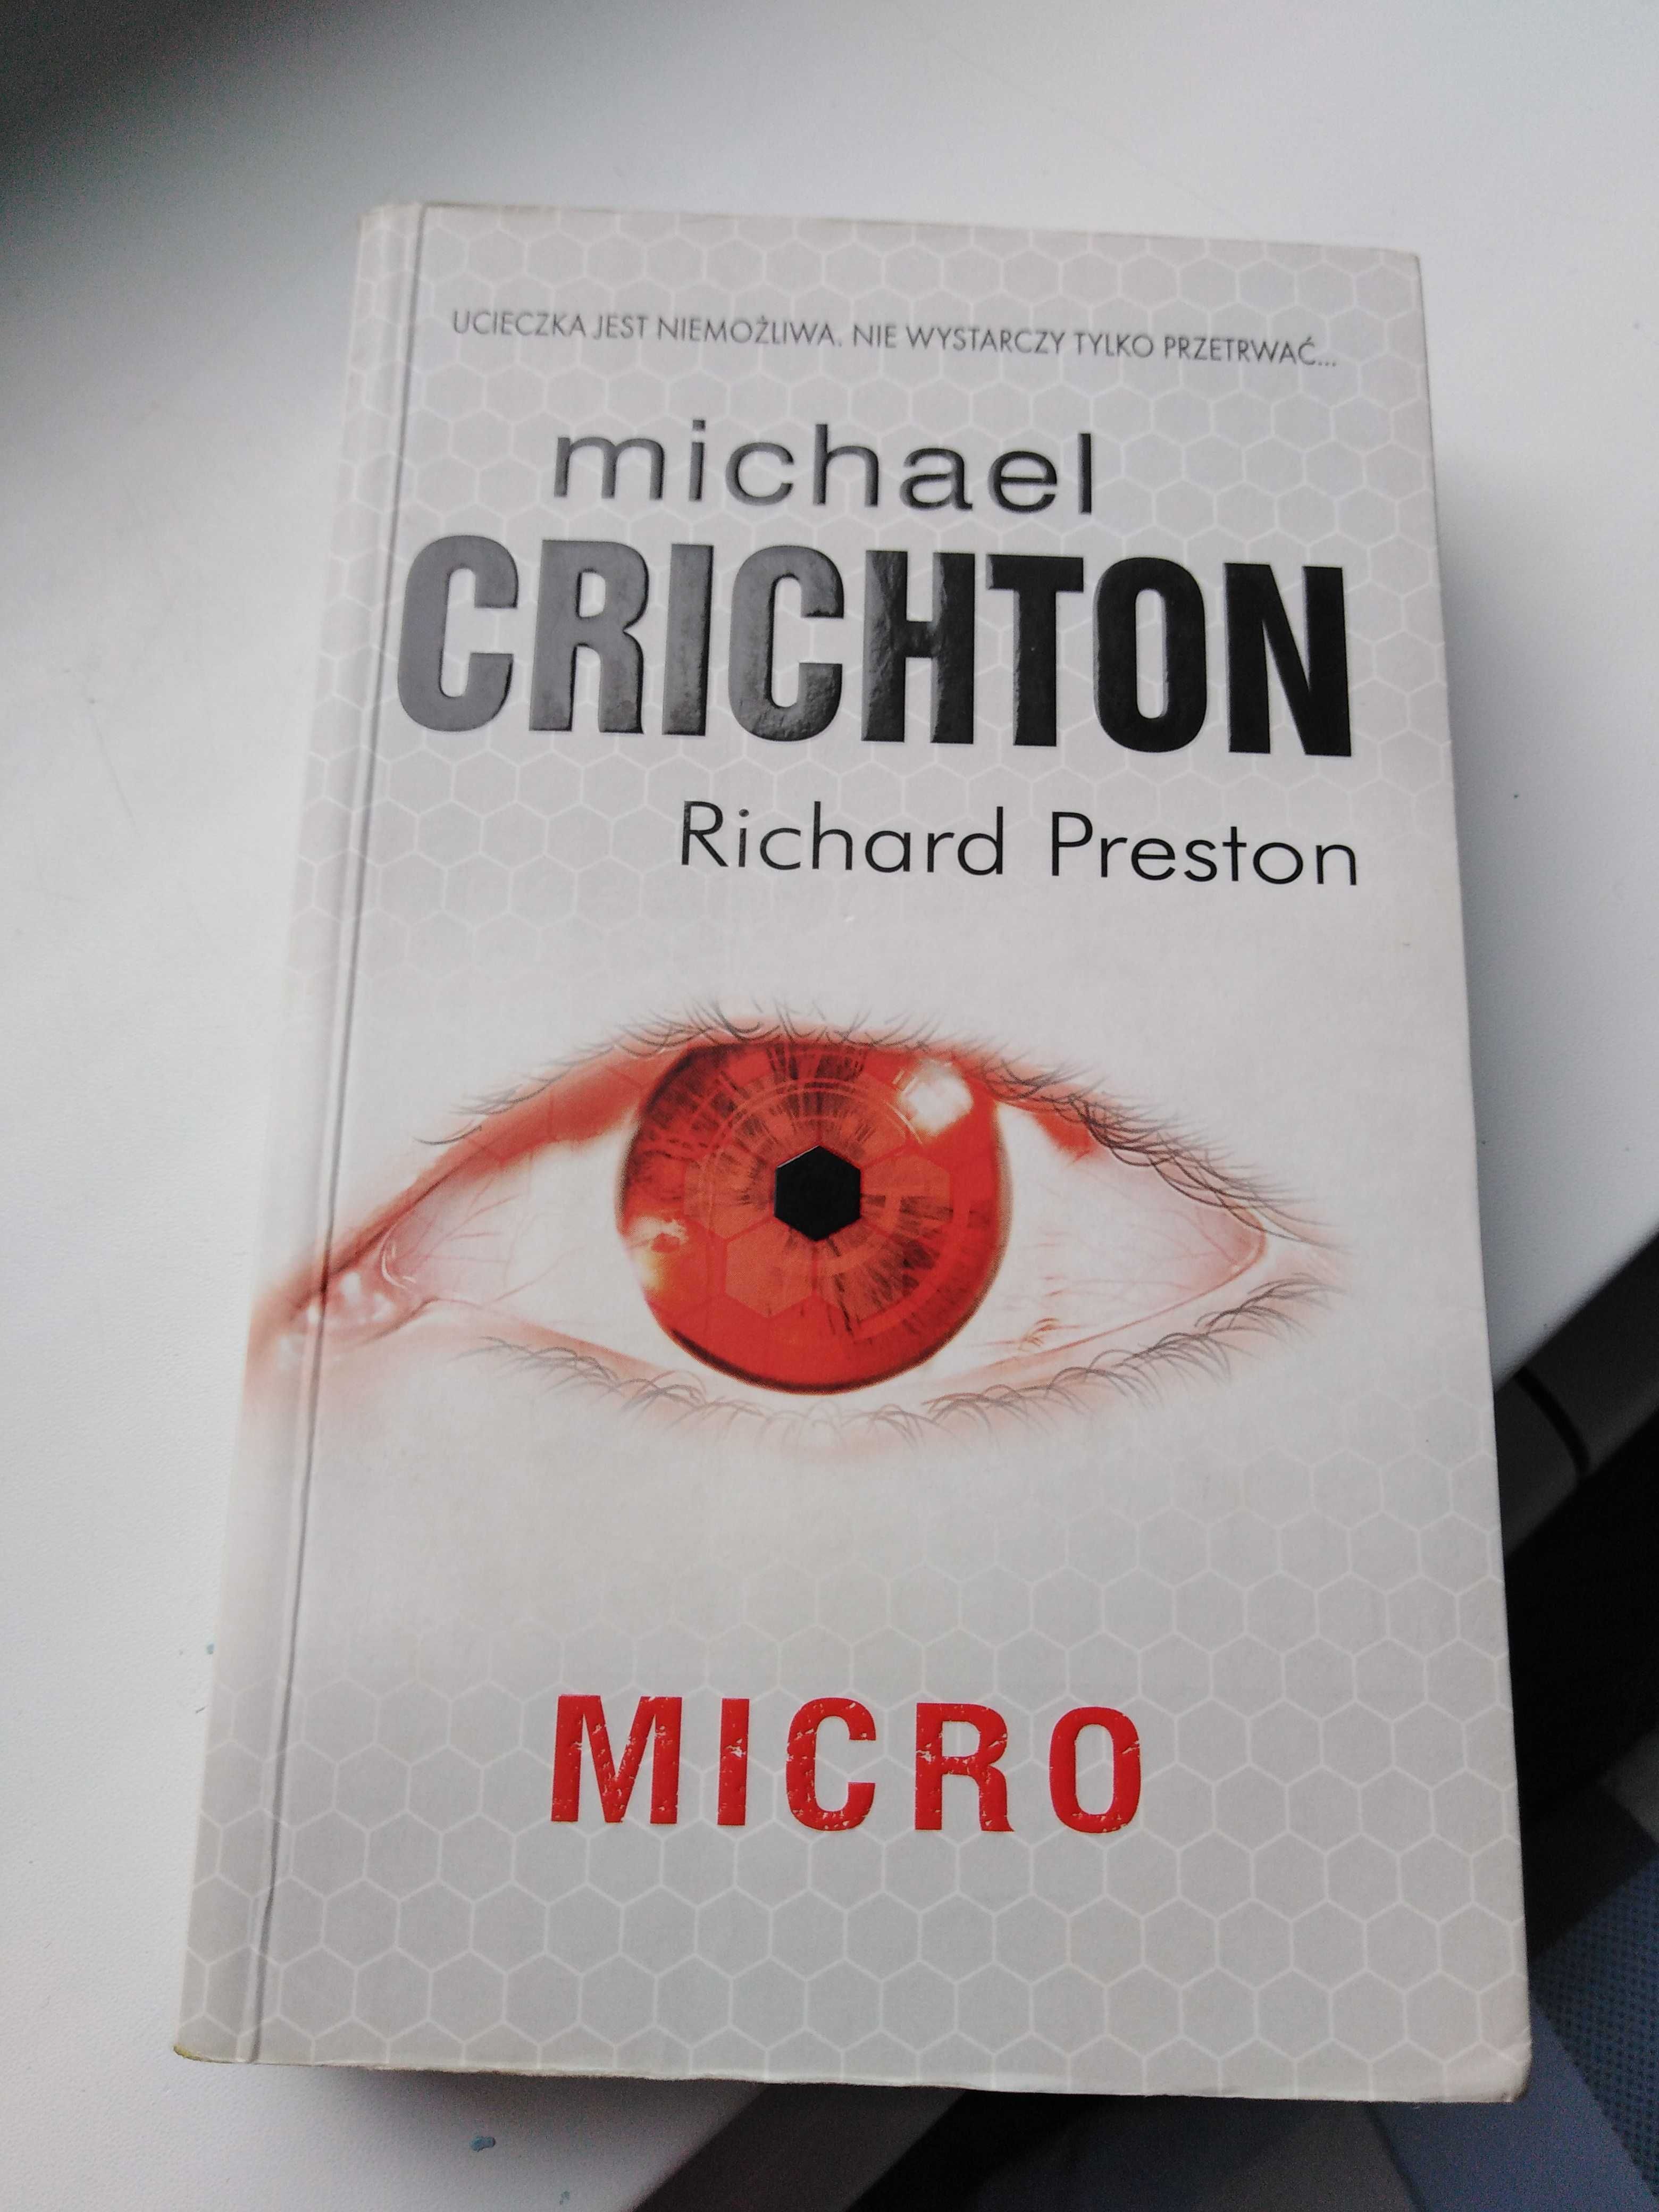 Michael Crichton, Richard Preston - Micro